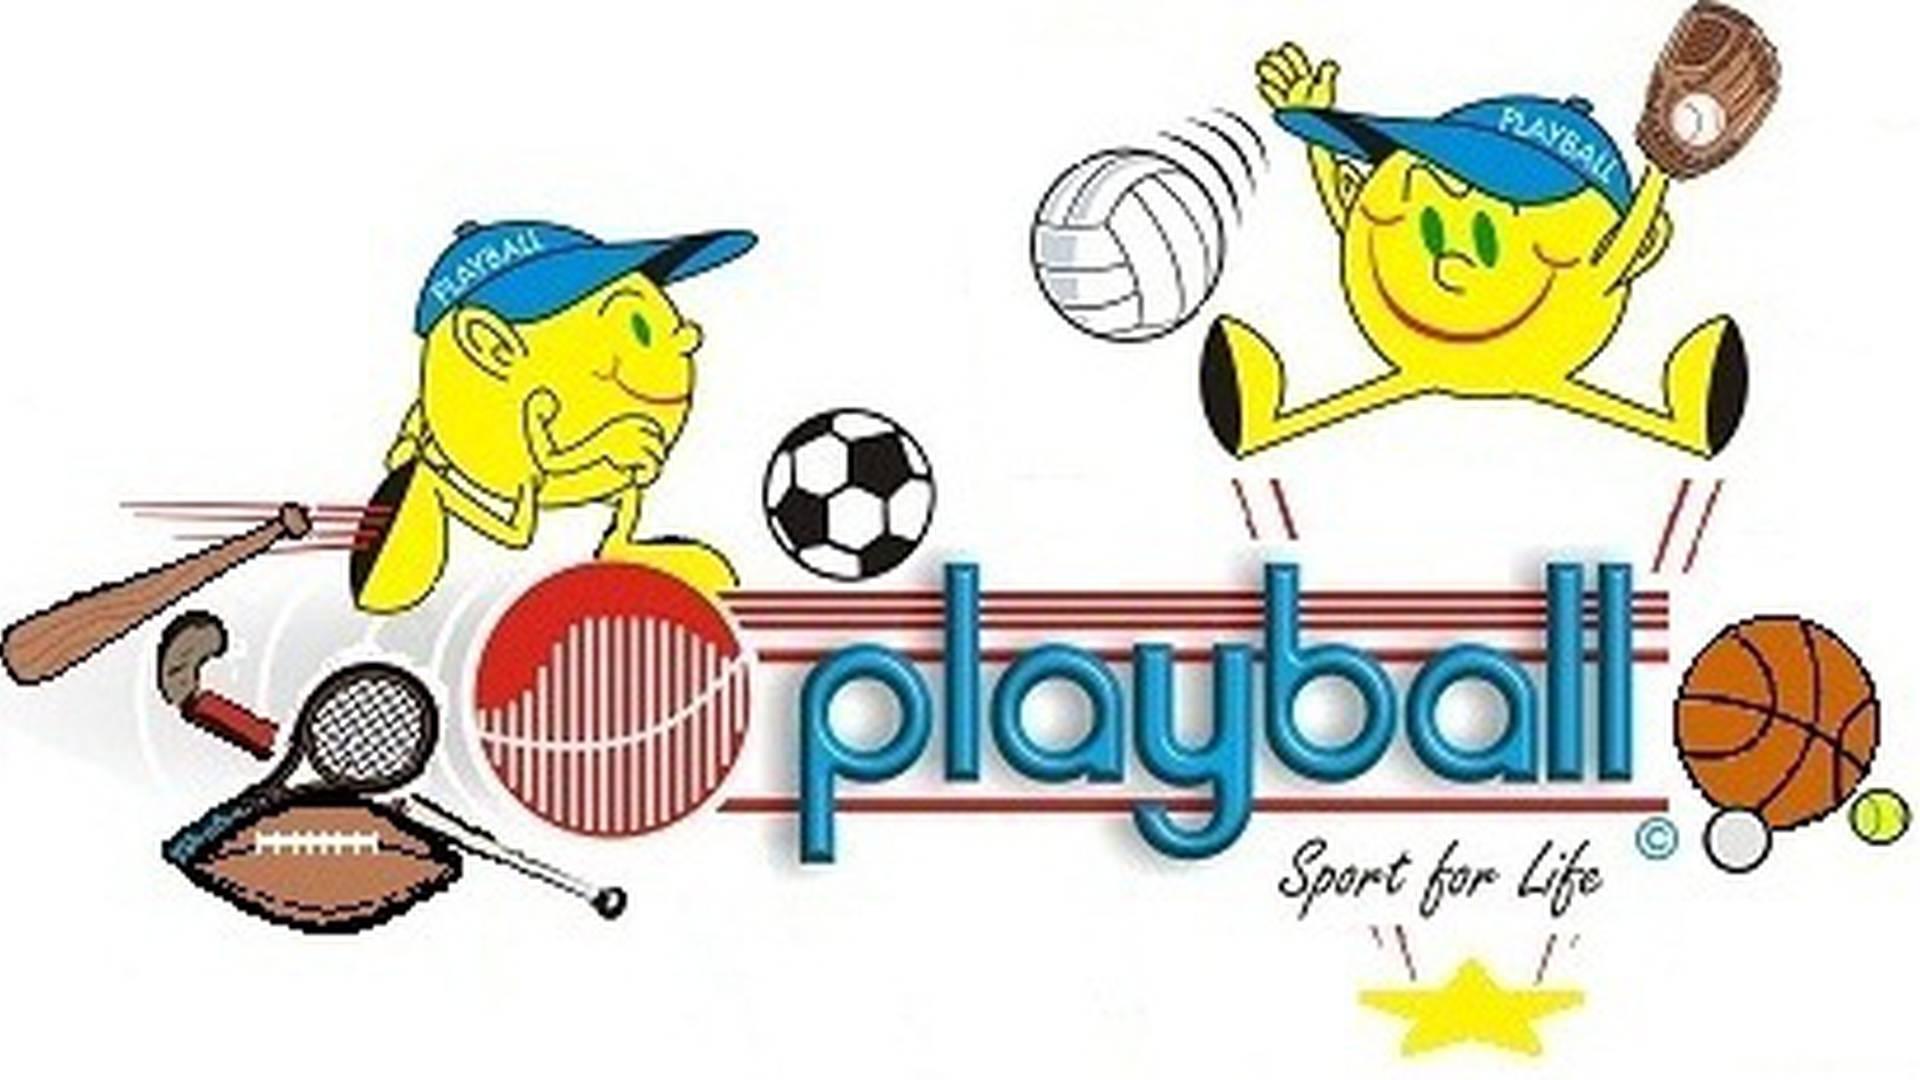 Playball photo